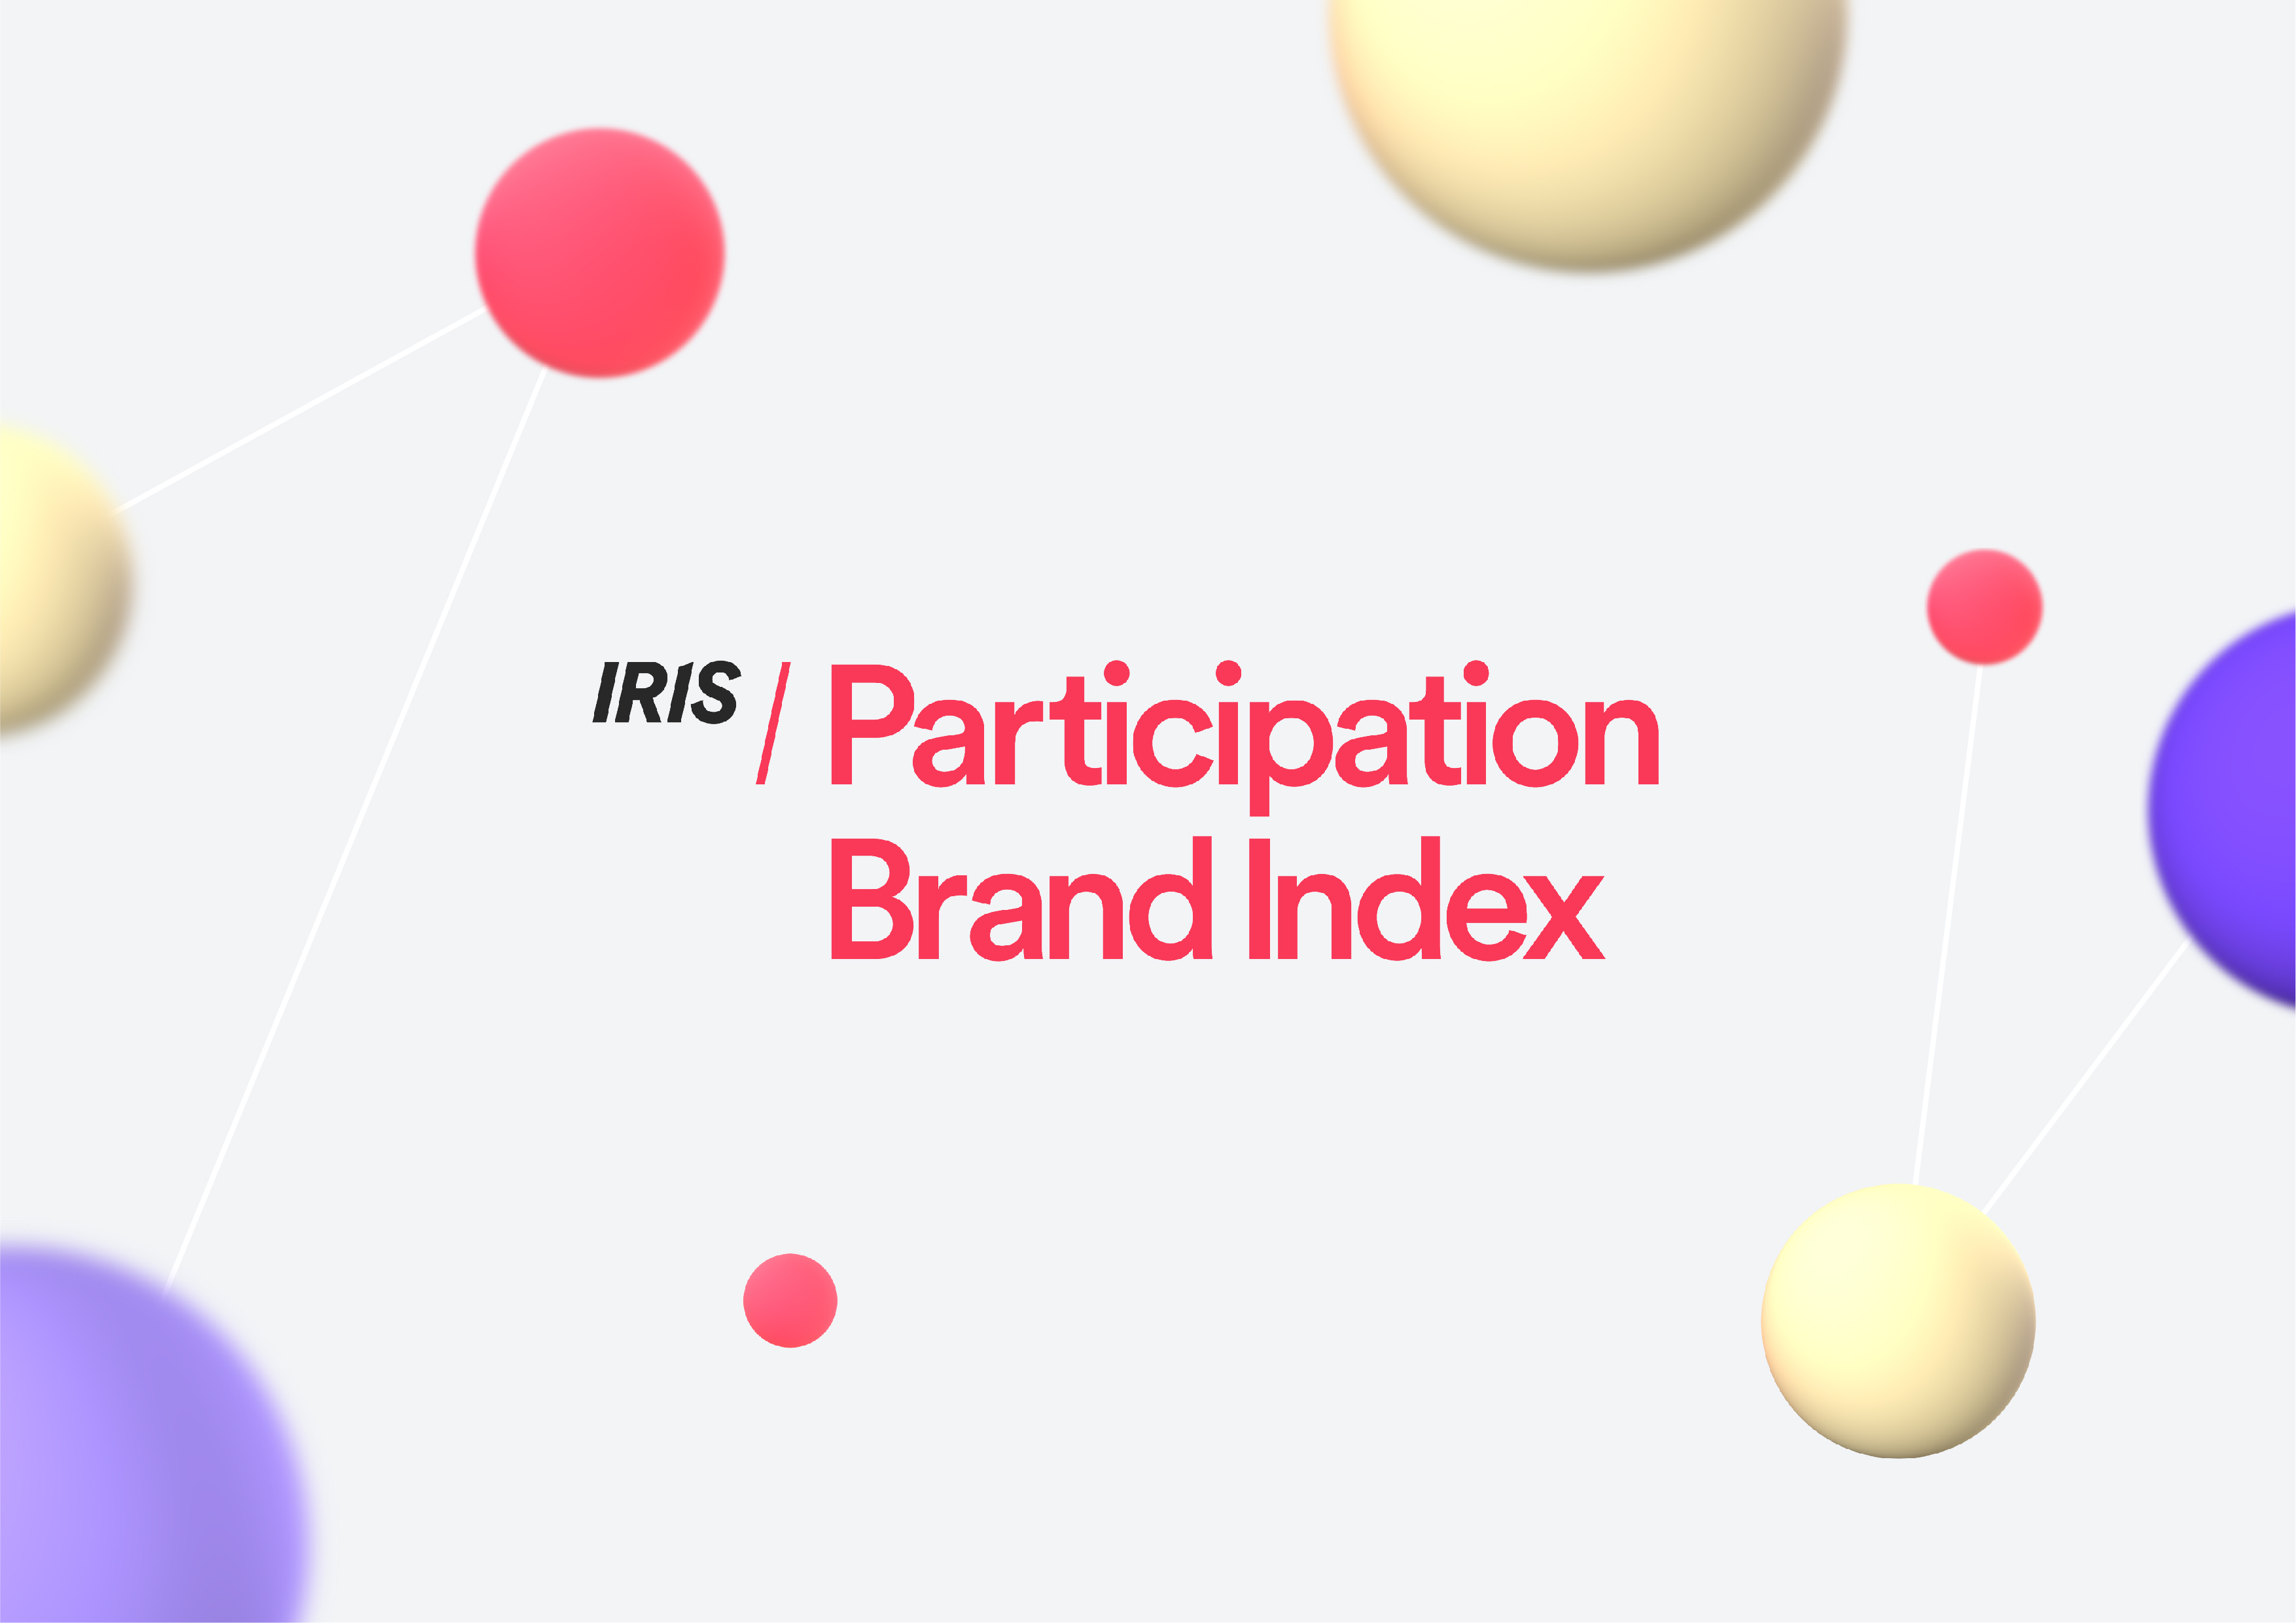 Participation Brand Index